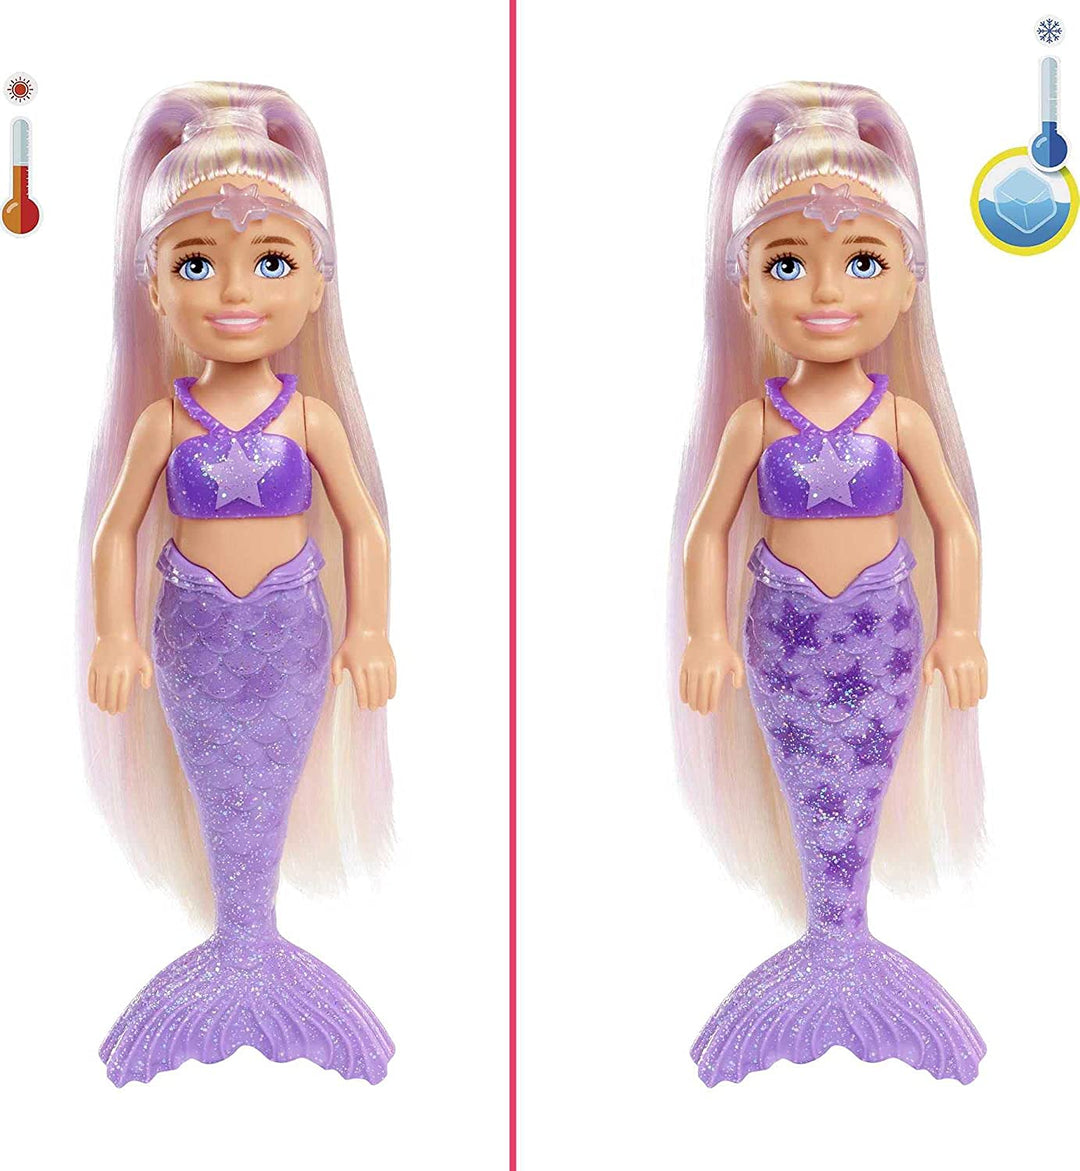 Barbie Chelsea Color Reveal Mermaid Doll - Water Reveals Full Look & Color Chang